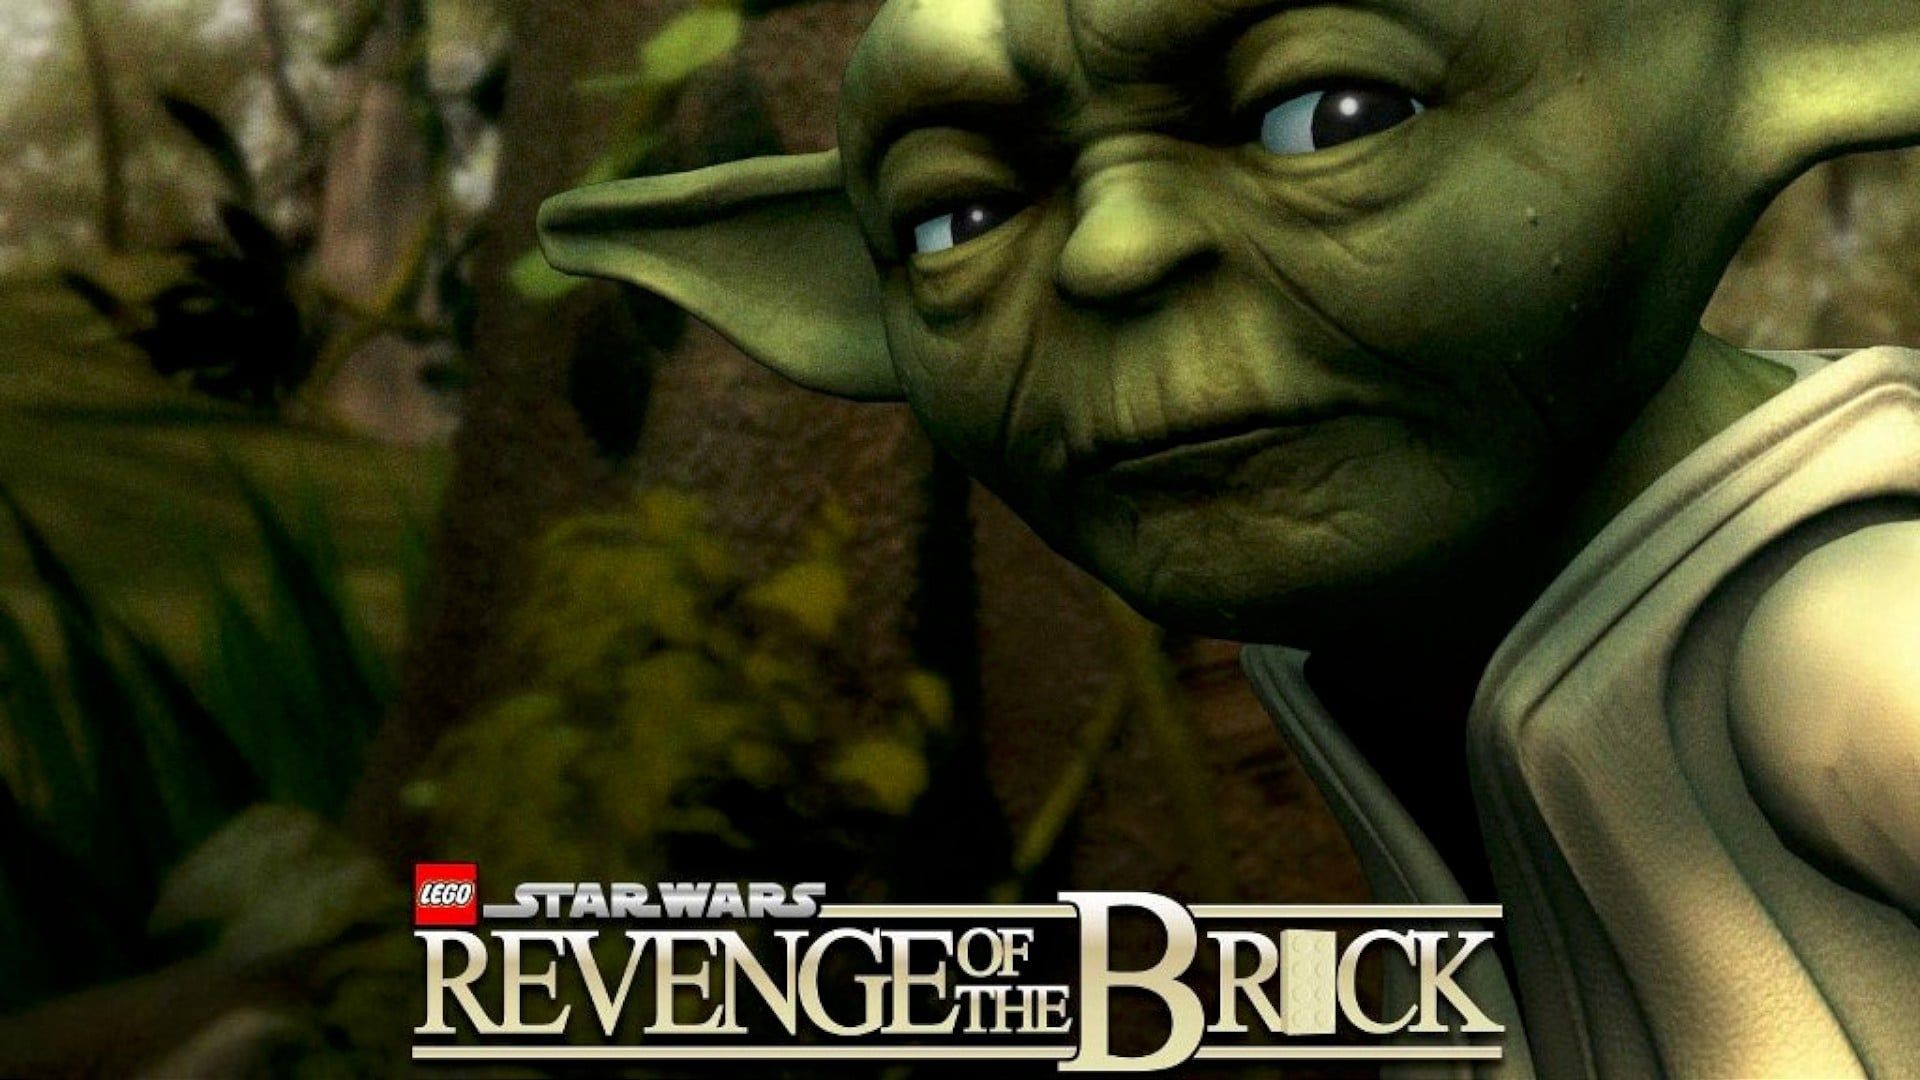 Lego Star Wars: Revenge of the Brick background